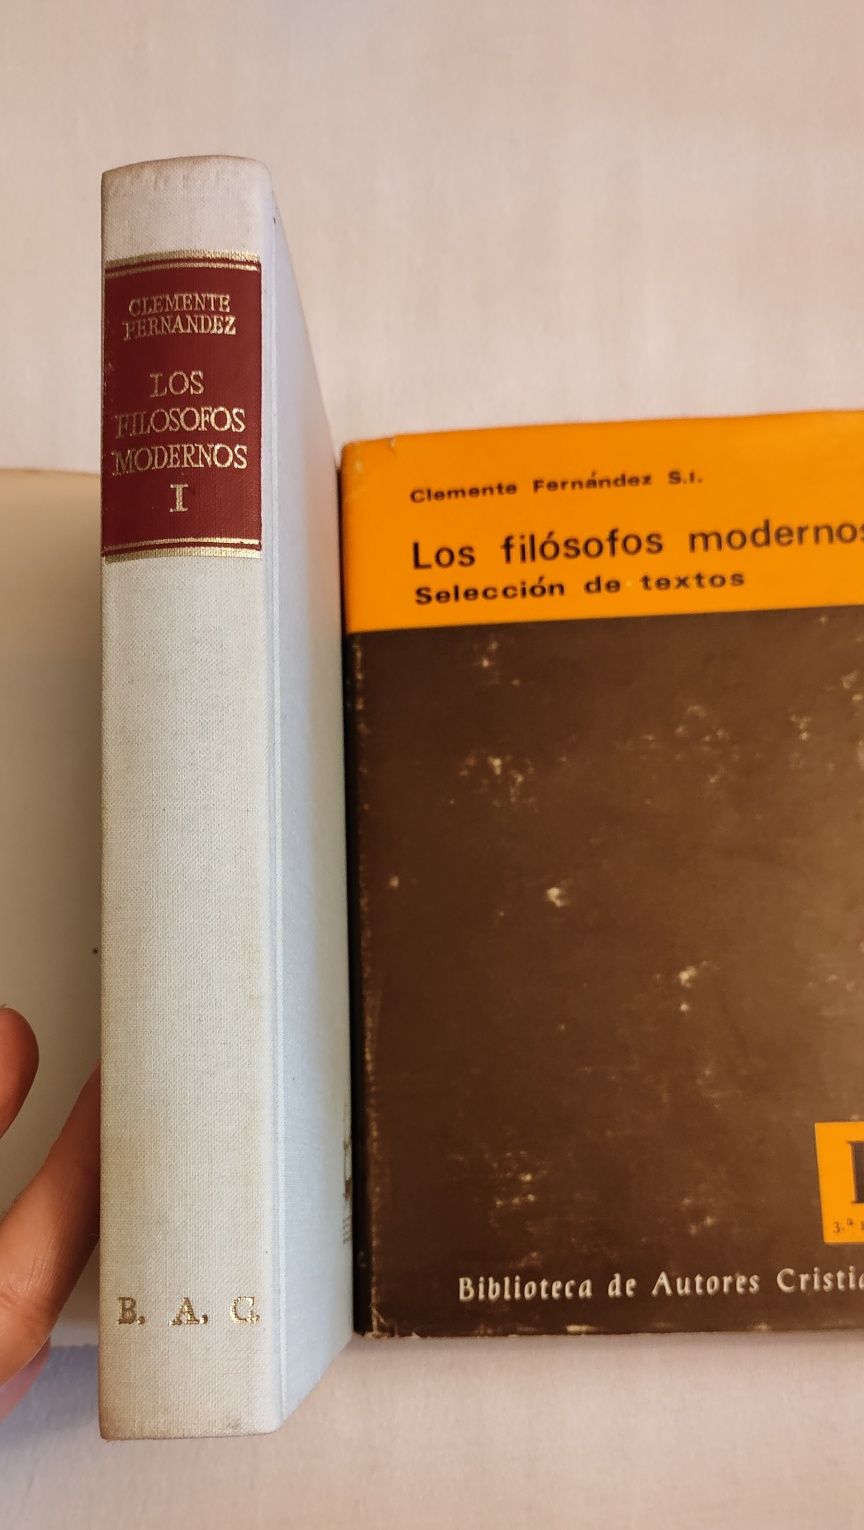 Los filósofos modernos - 2 volumes